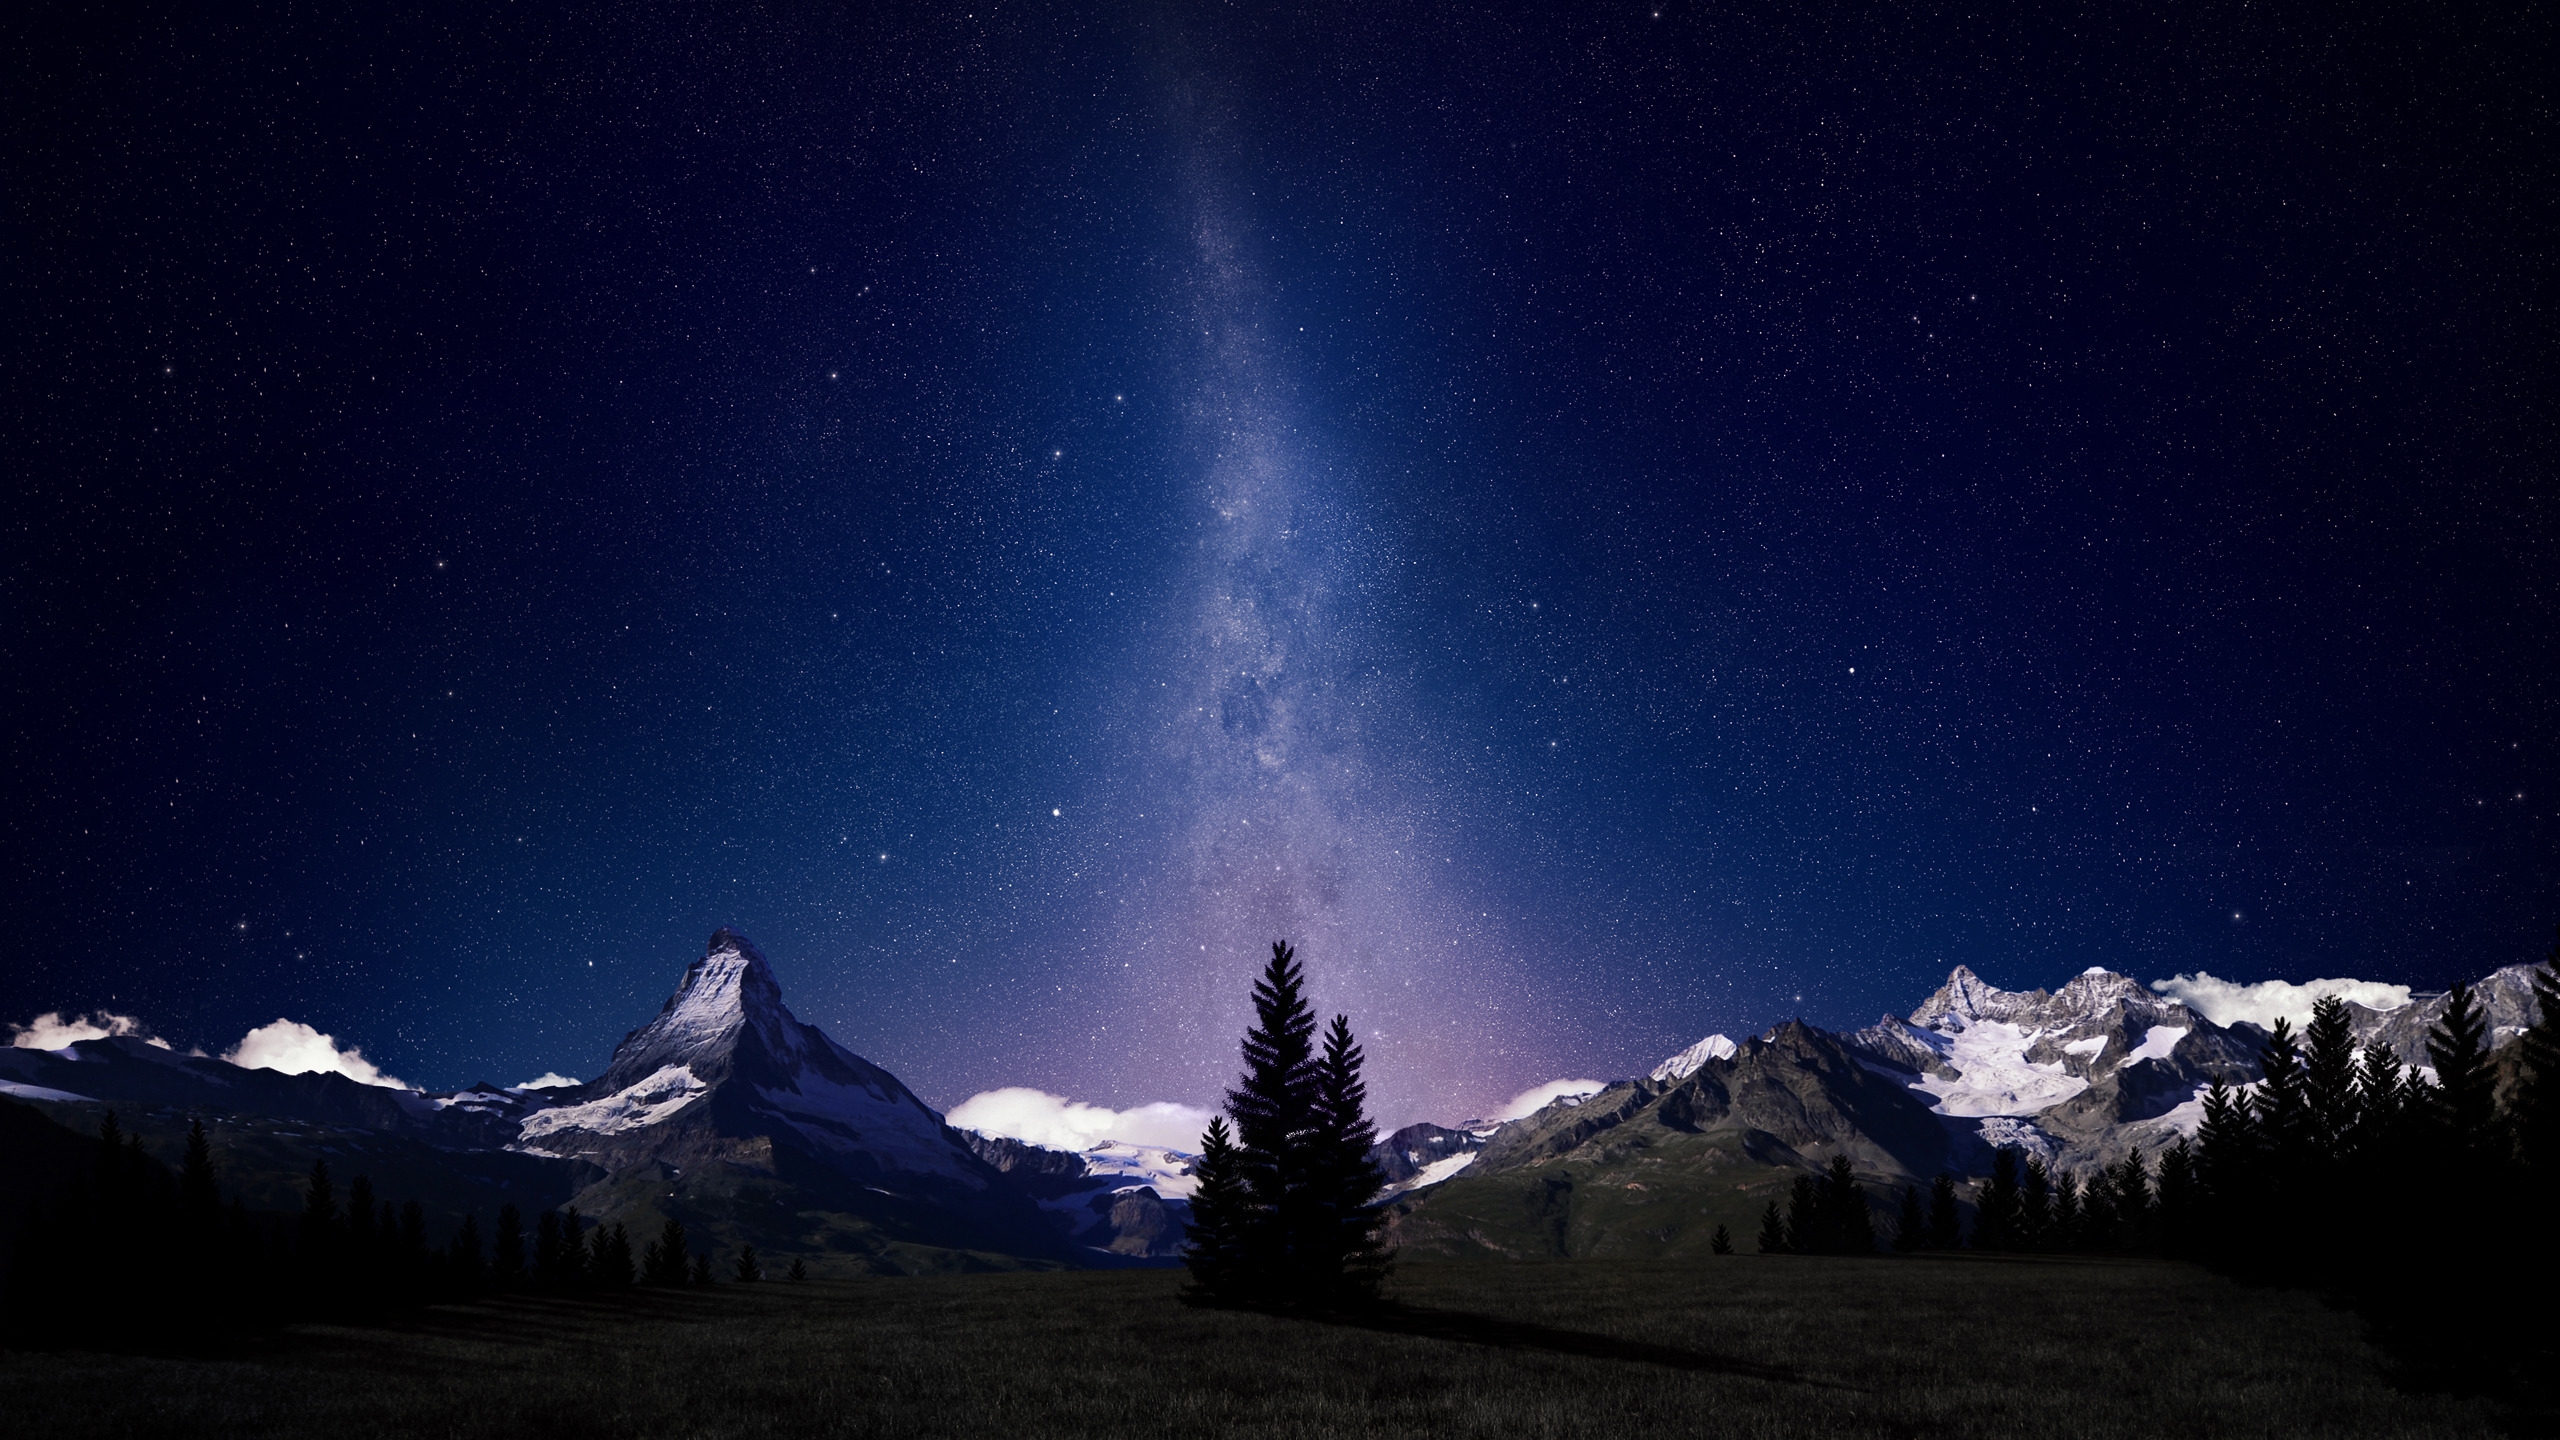 Alpine Night Sky for 2560x1440 HDTV resolution